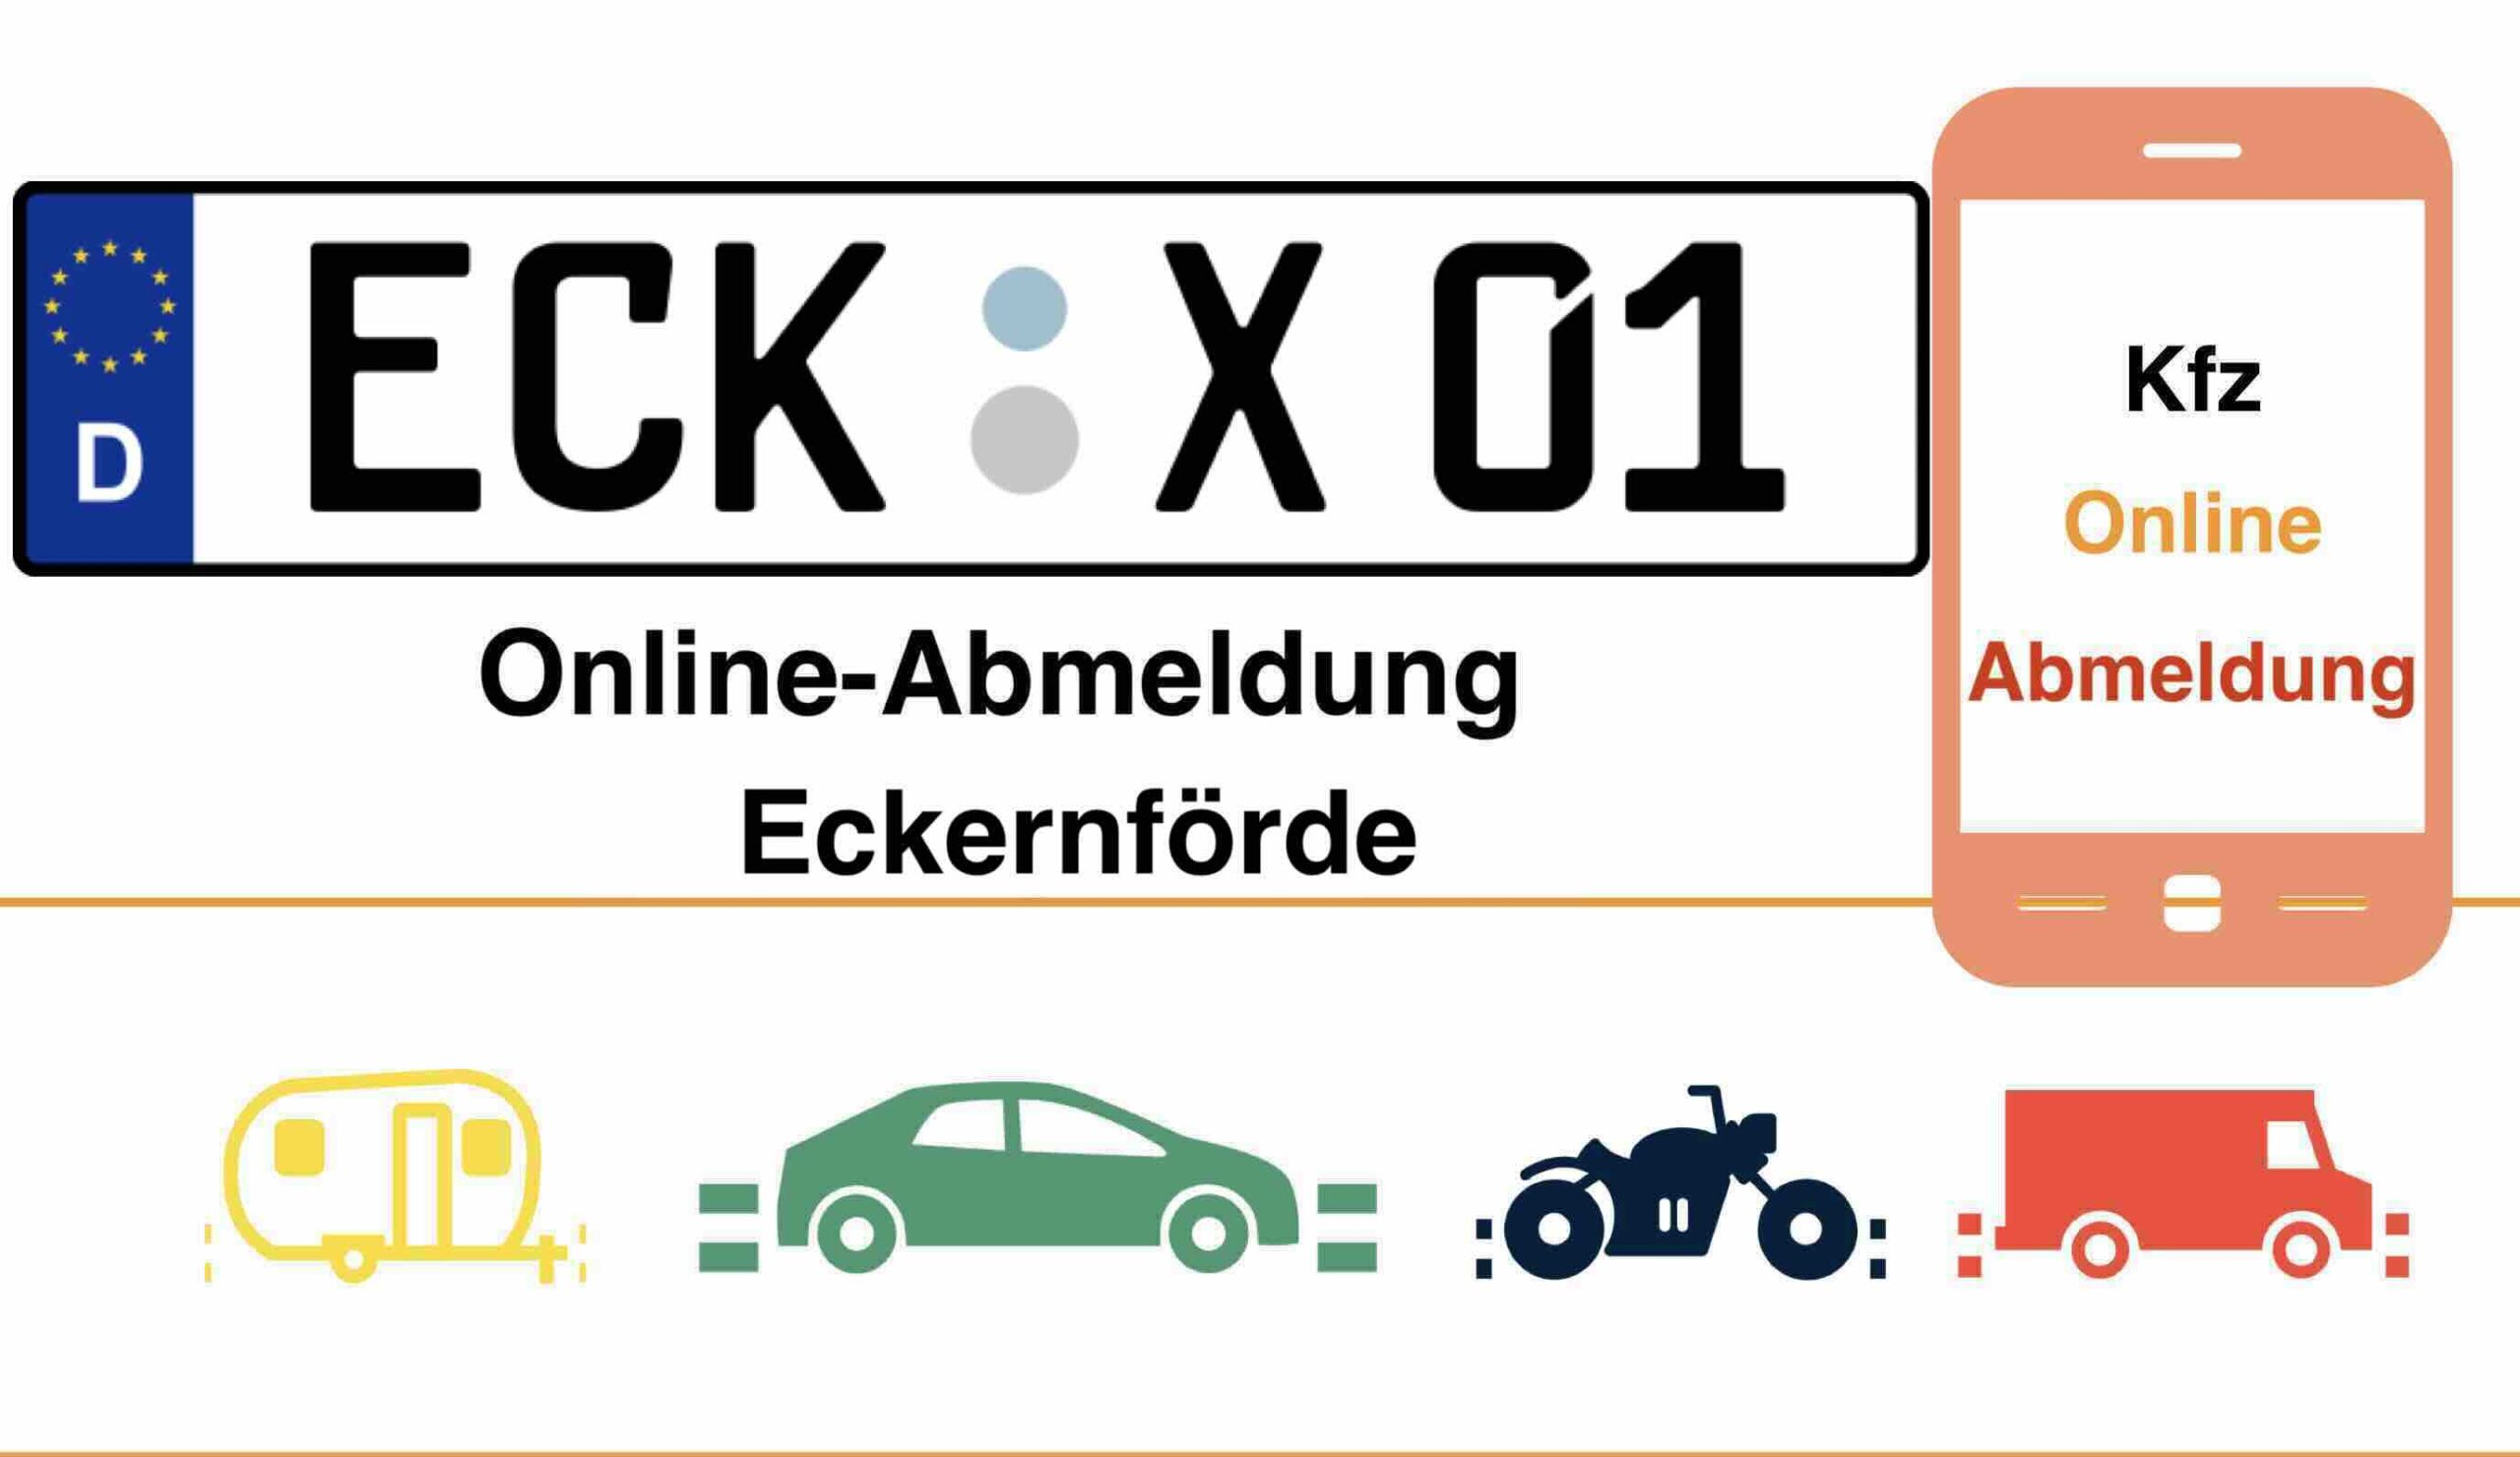 Online-Abmeldung in Eckernförde 